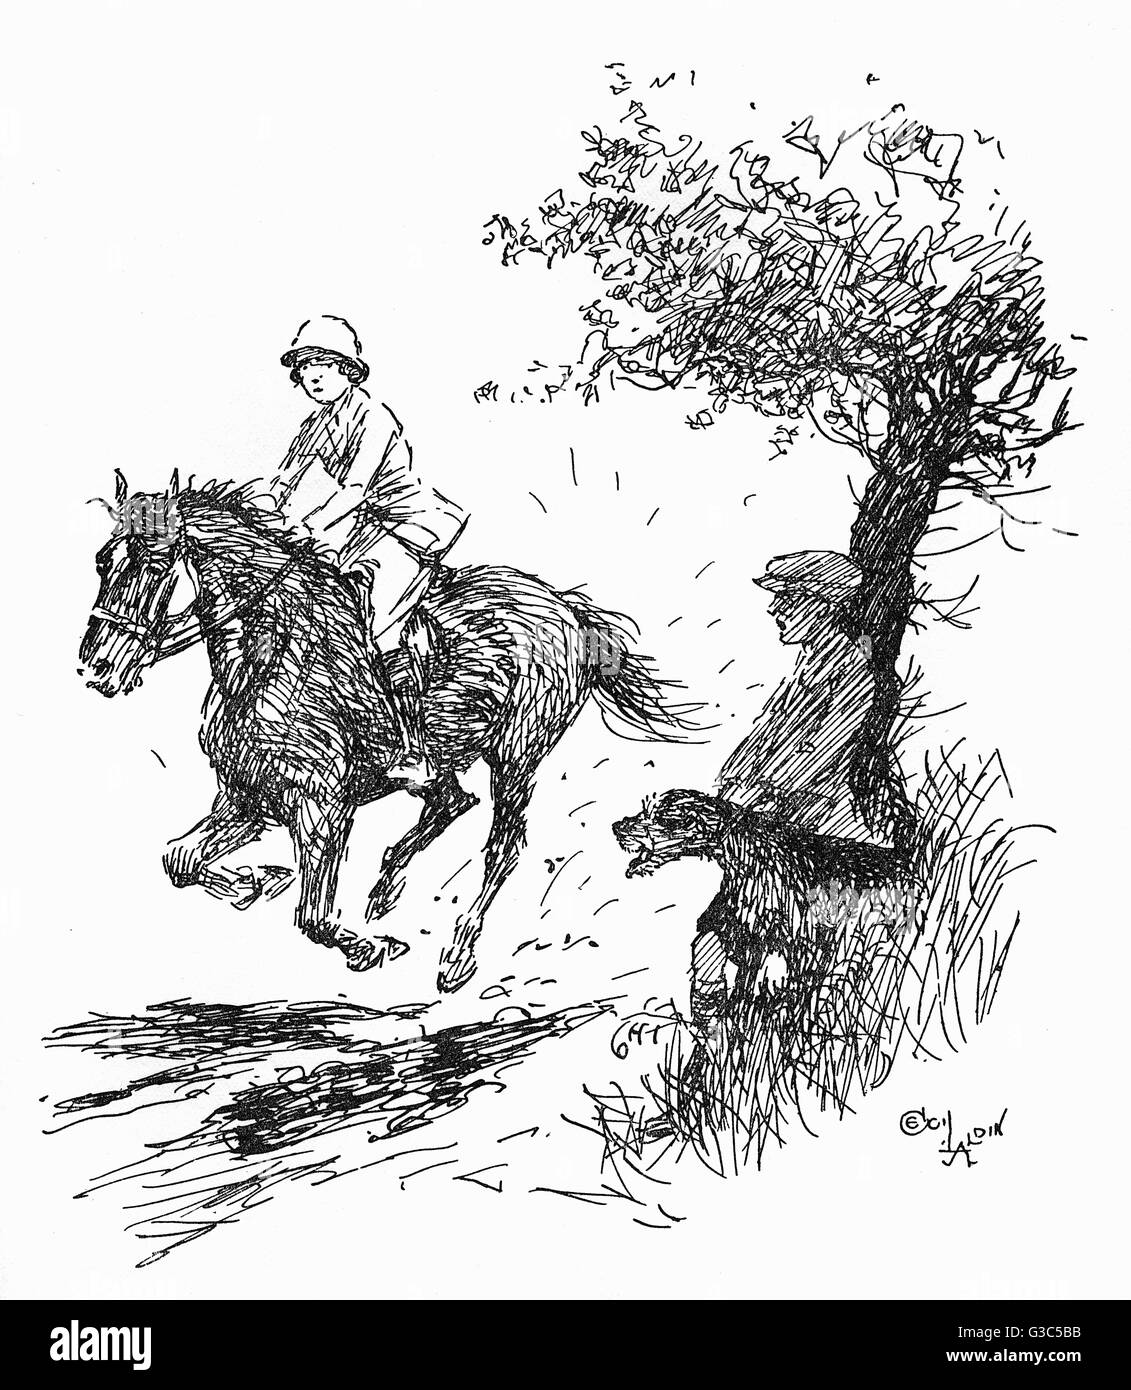 Illustration, riding through a muddy patch Stock Photo